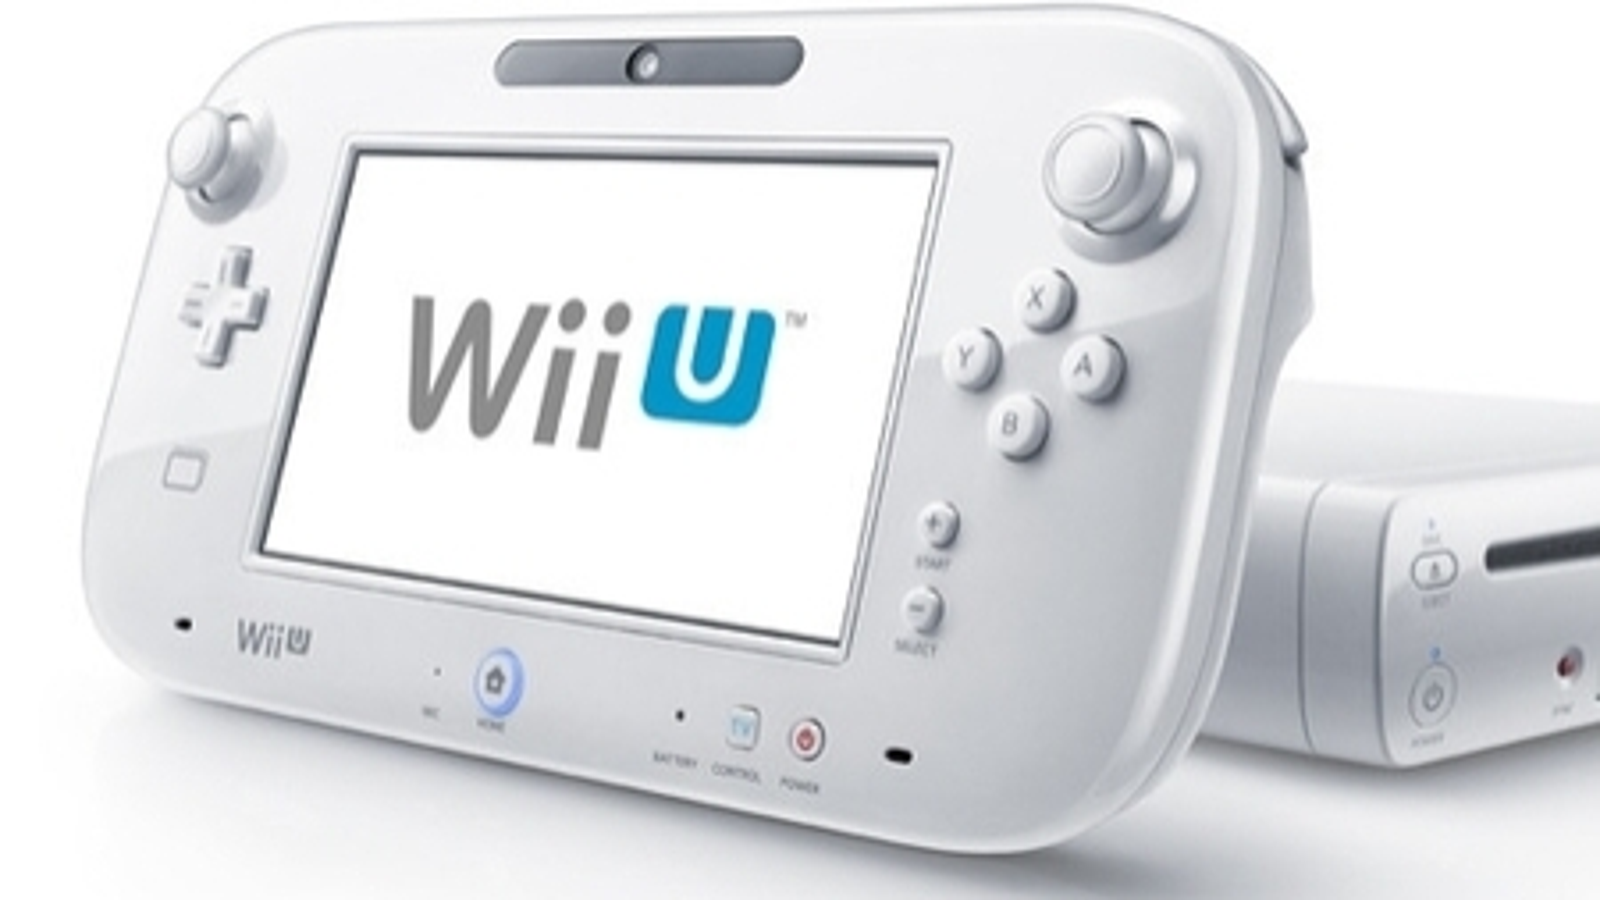 Bergantín Diariamente Inhibir Every Wii U UK launch game listed | Eurogamer.net